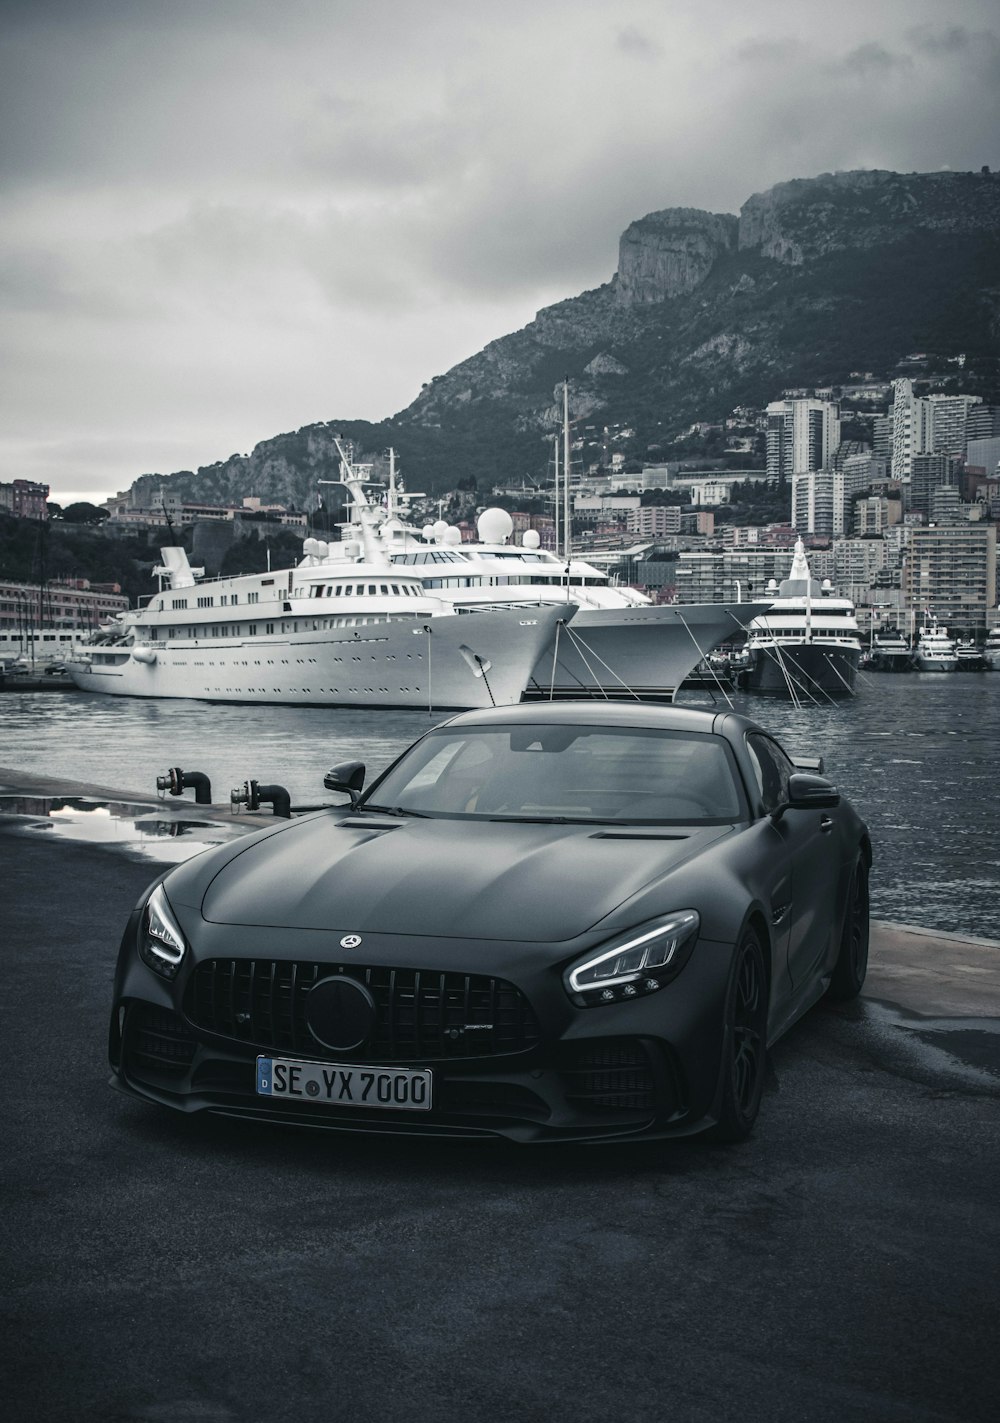 500+ Mercedes Pictures | Download Free Images on Unsplash